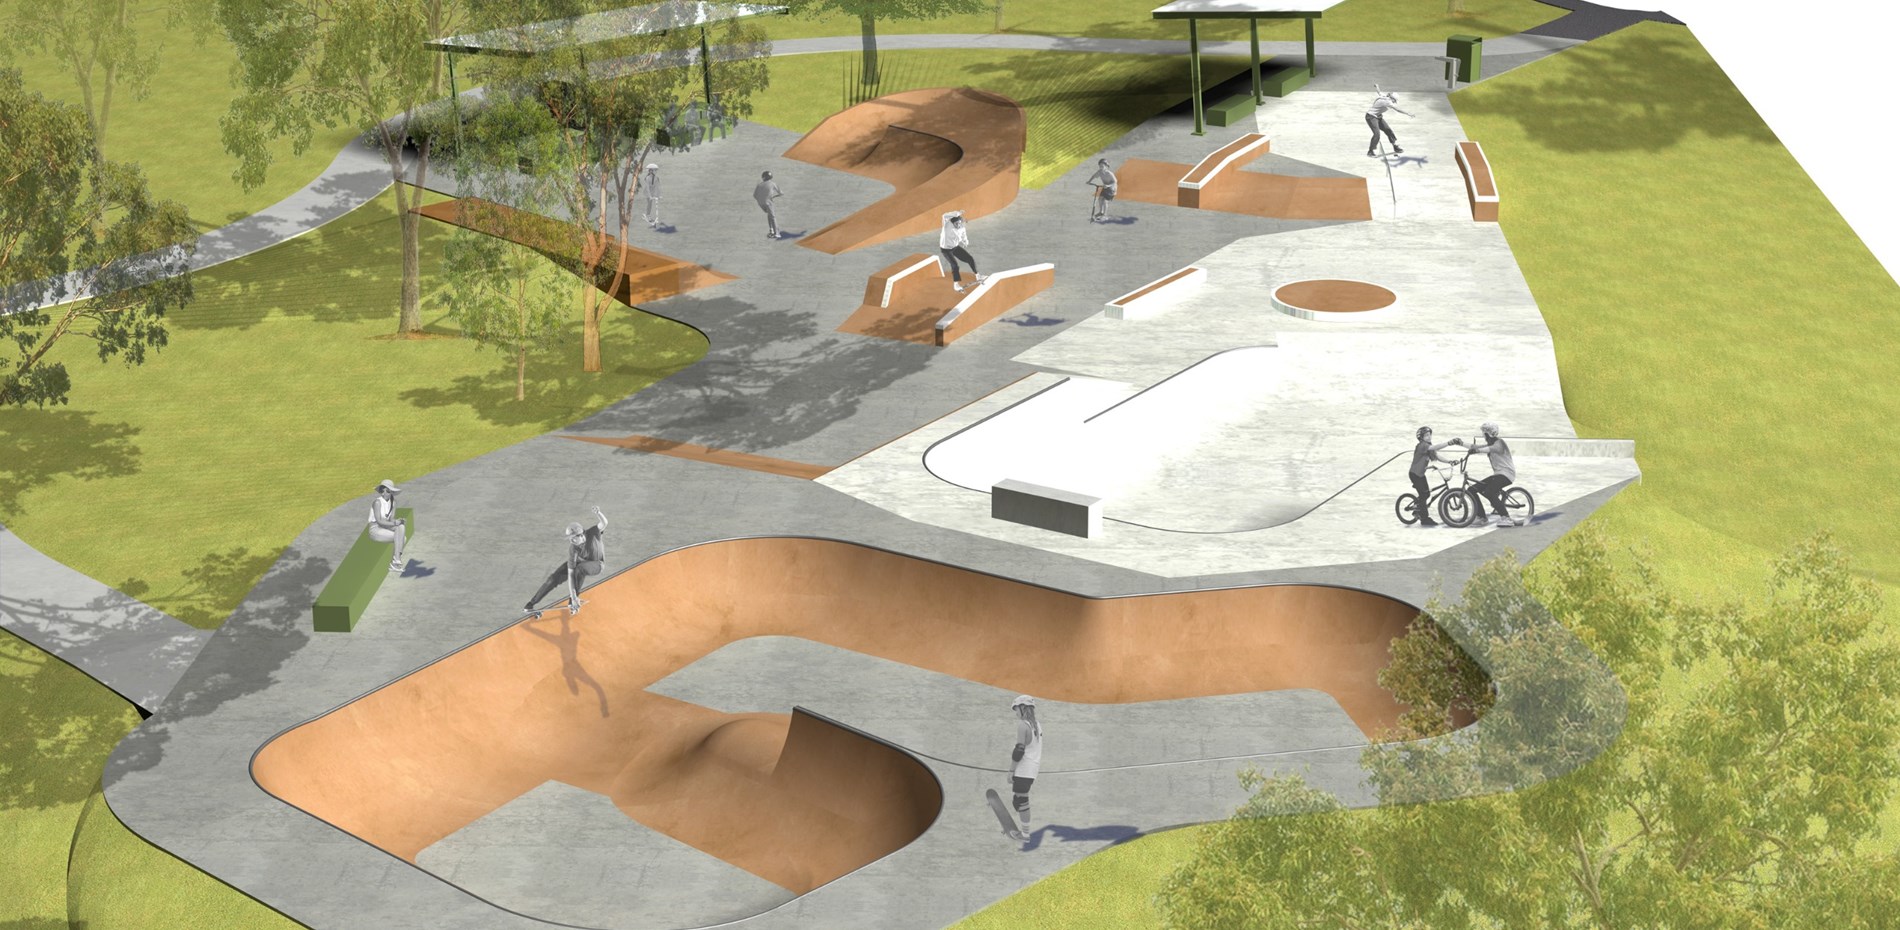 Eltham Skate Park receives $300,000 from Victorian Parks Revitalisation Grant Main Image